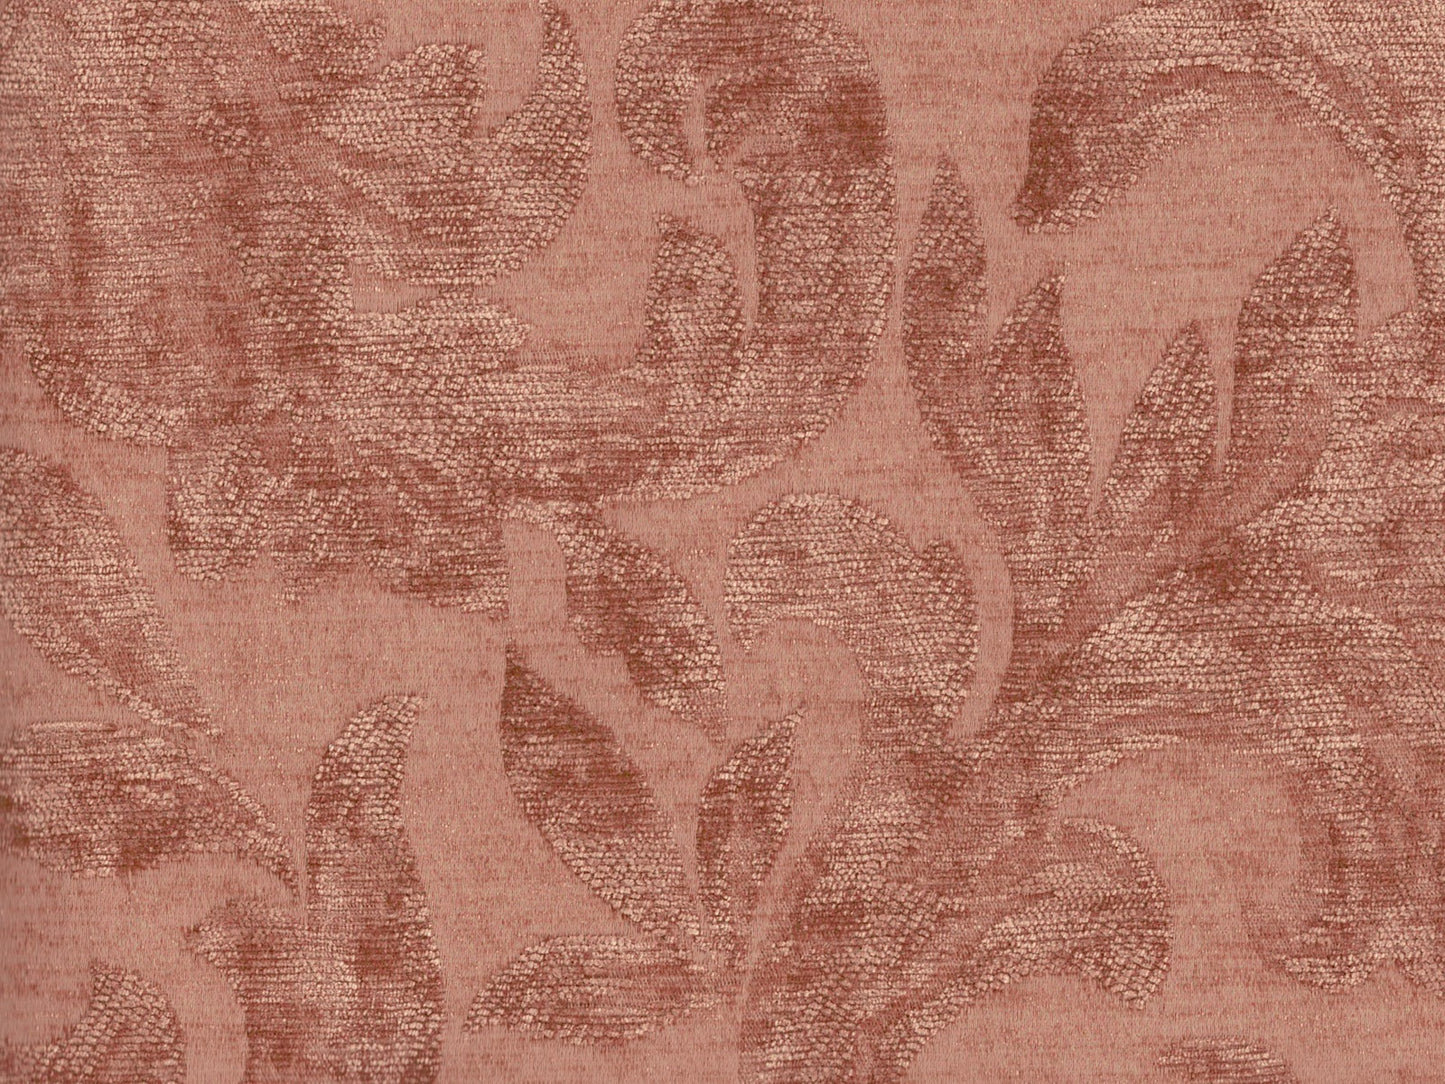 Fortuna Fabric Samples - Rydan Interiors